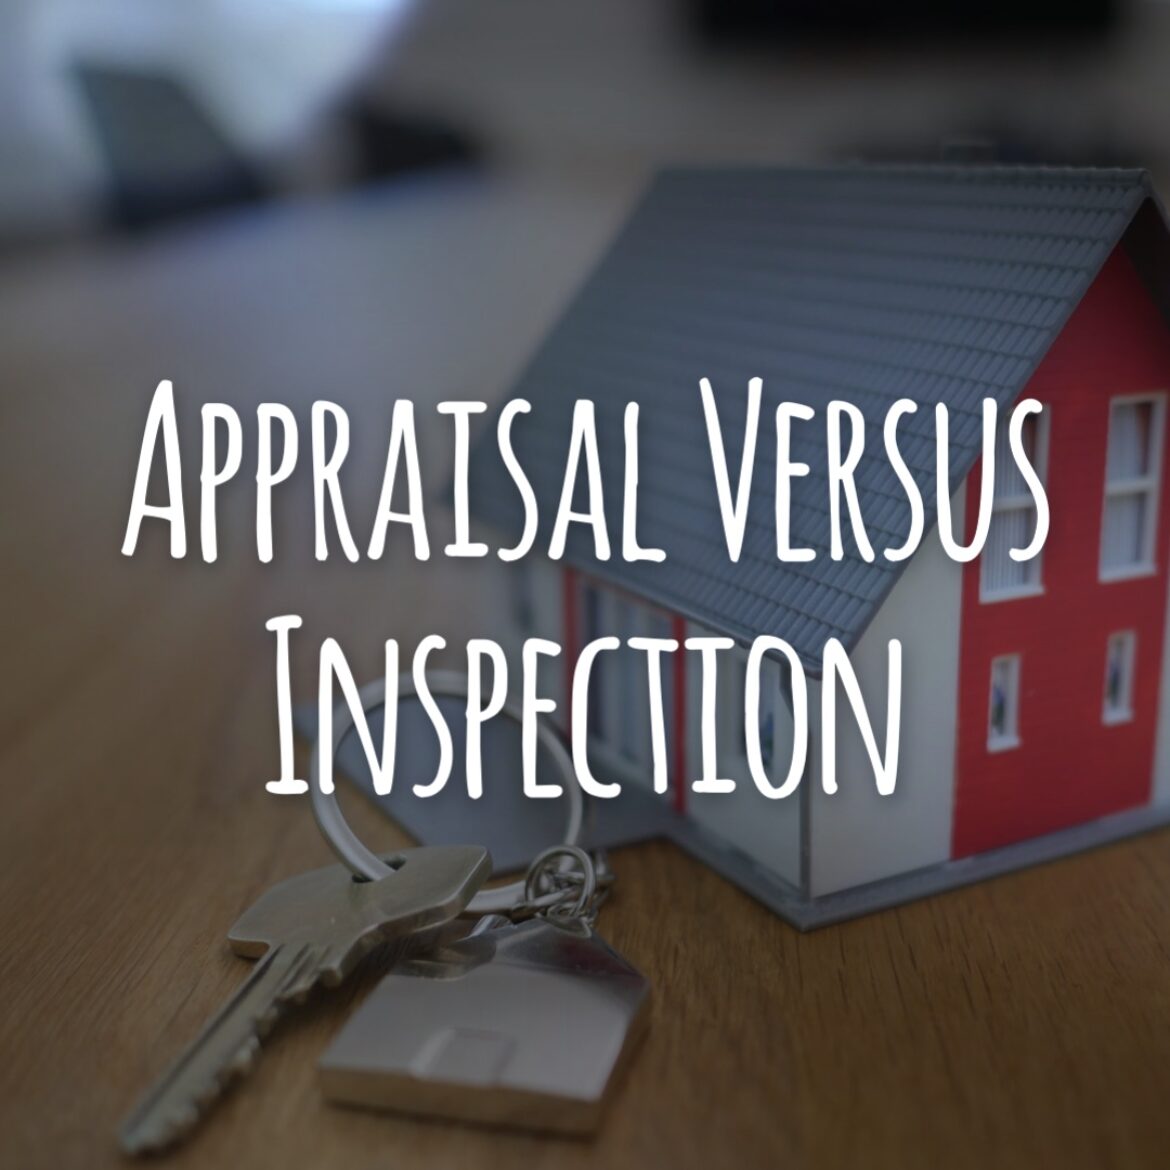 Appraisal Versus Inspection